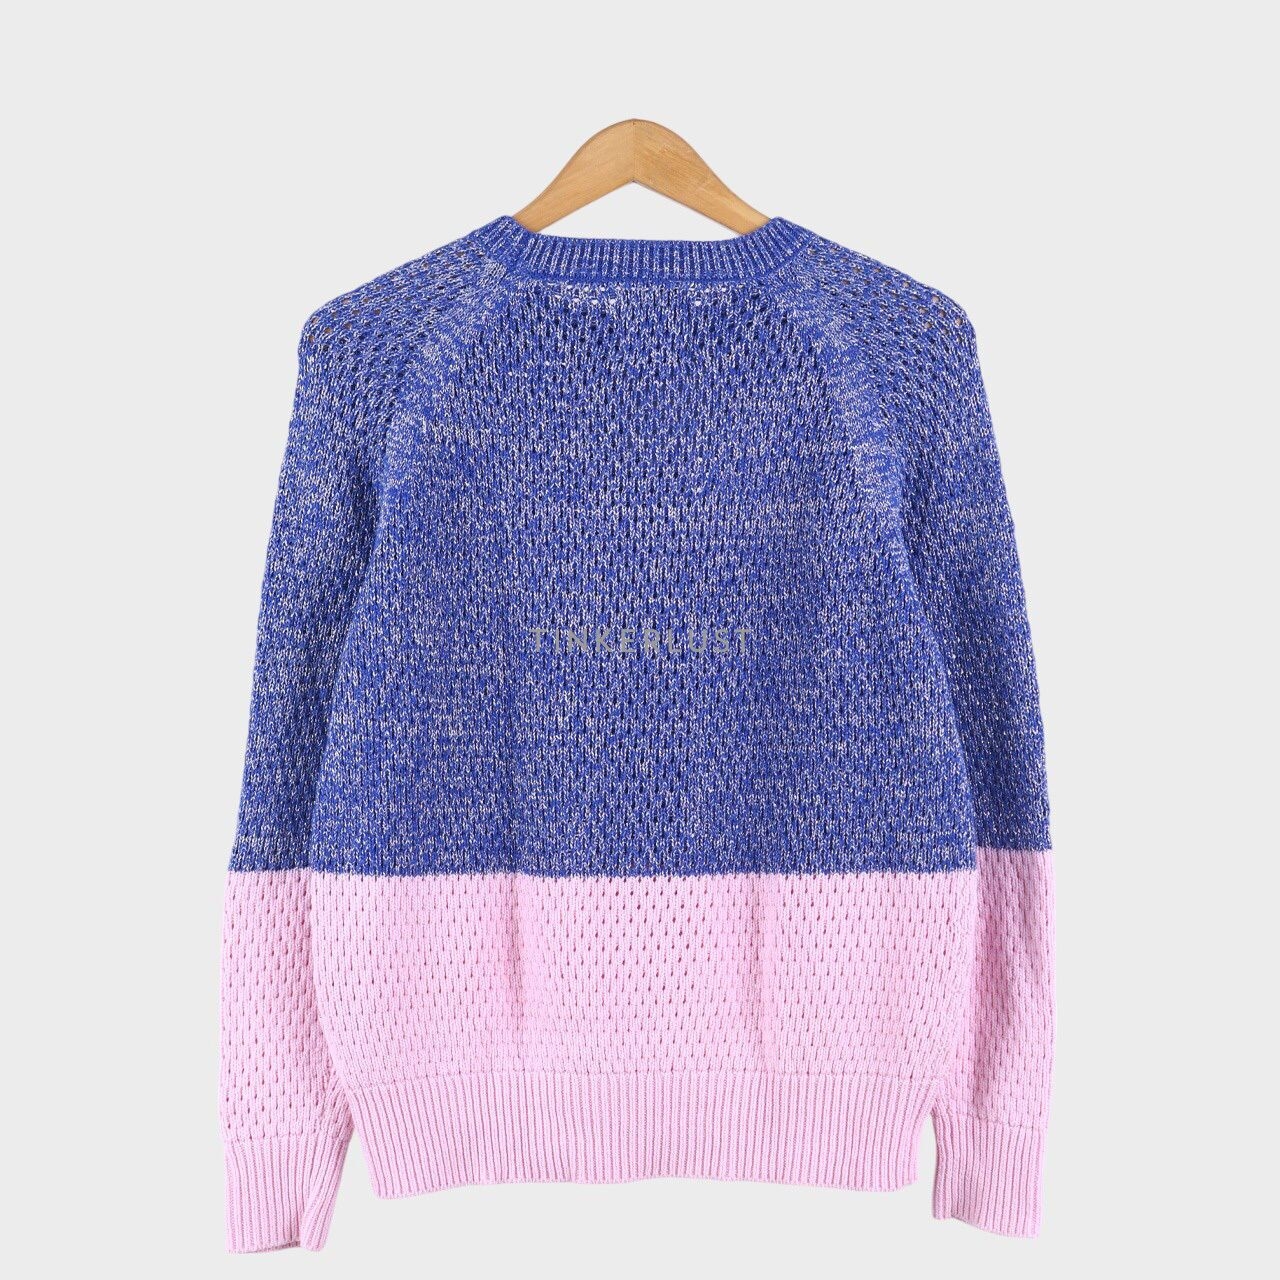 Disney Blue & Pink Knit Sweater